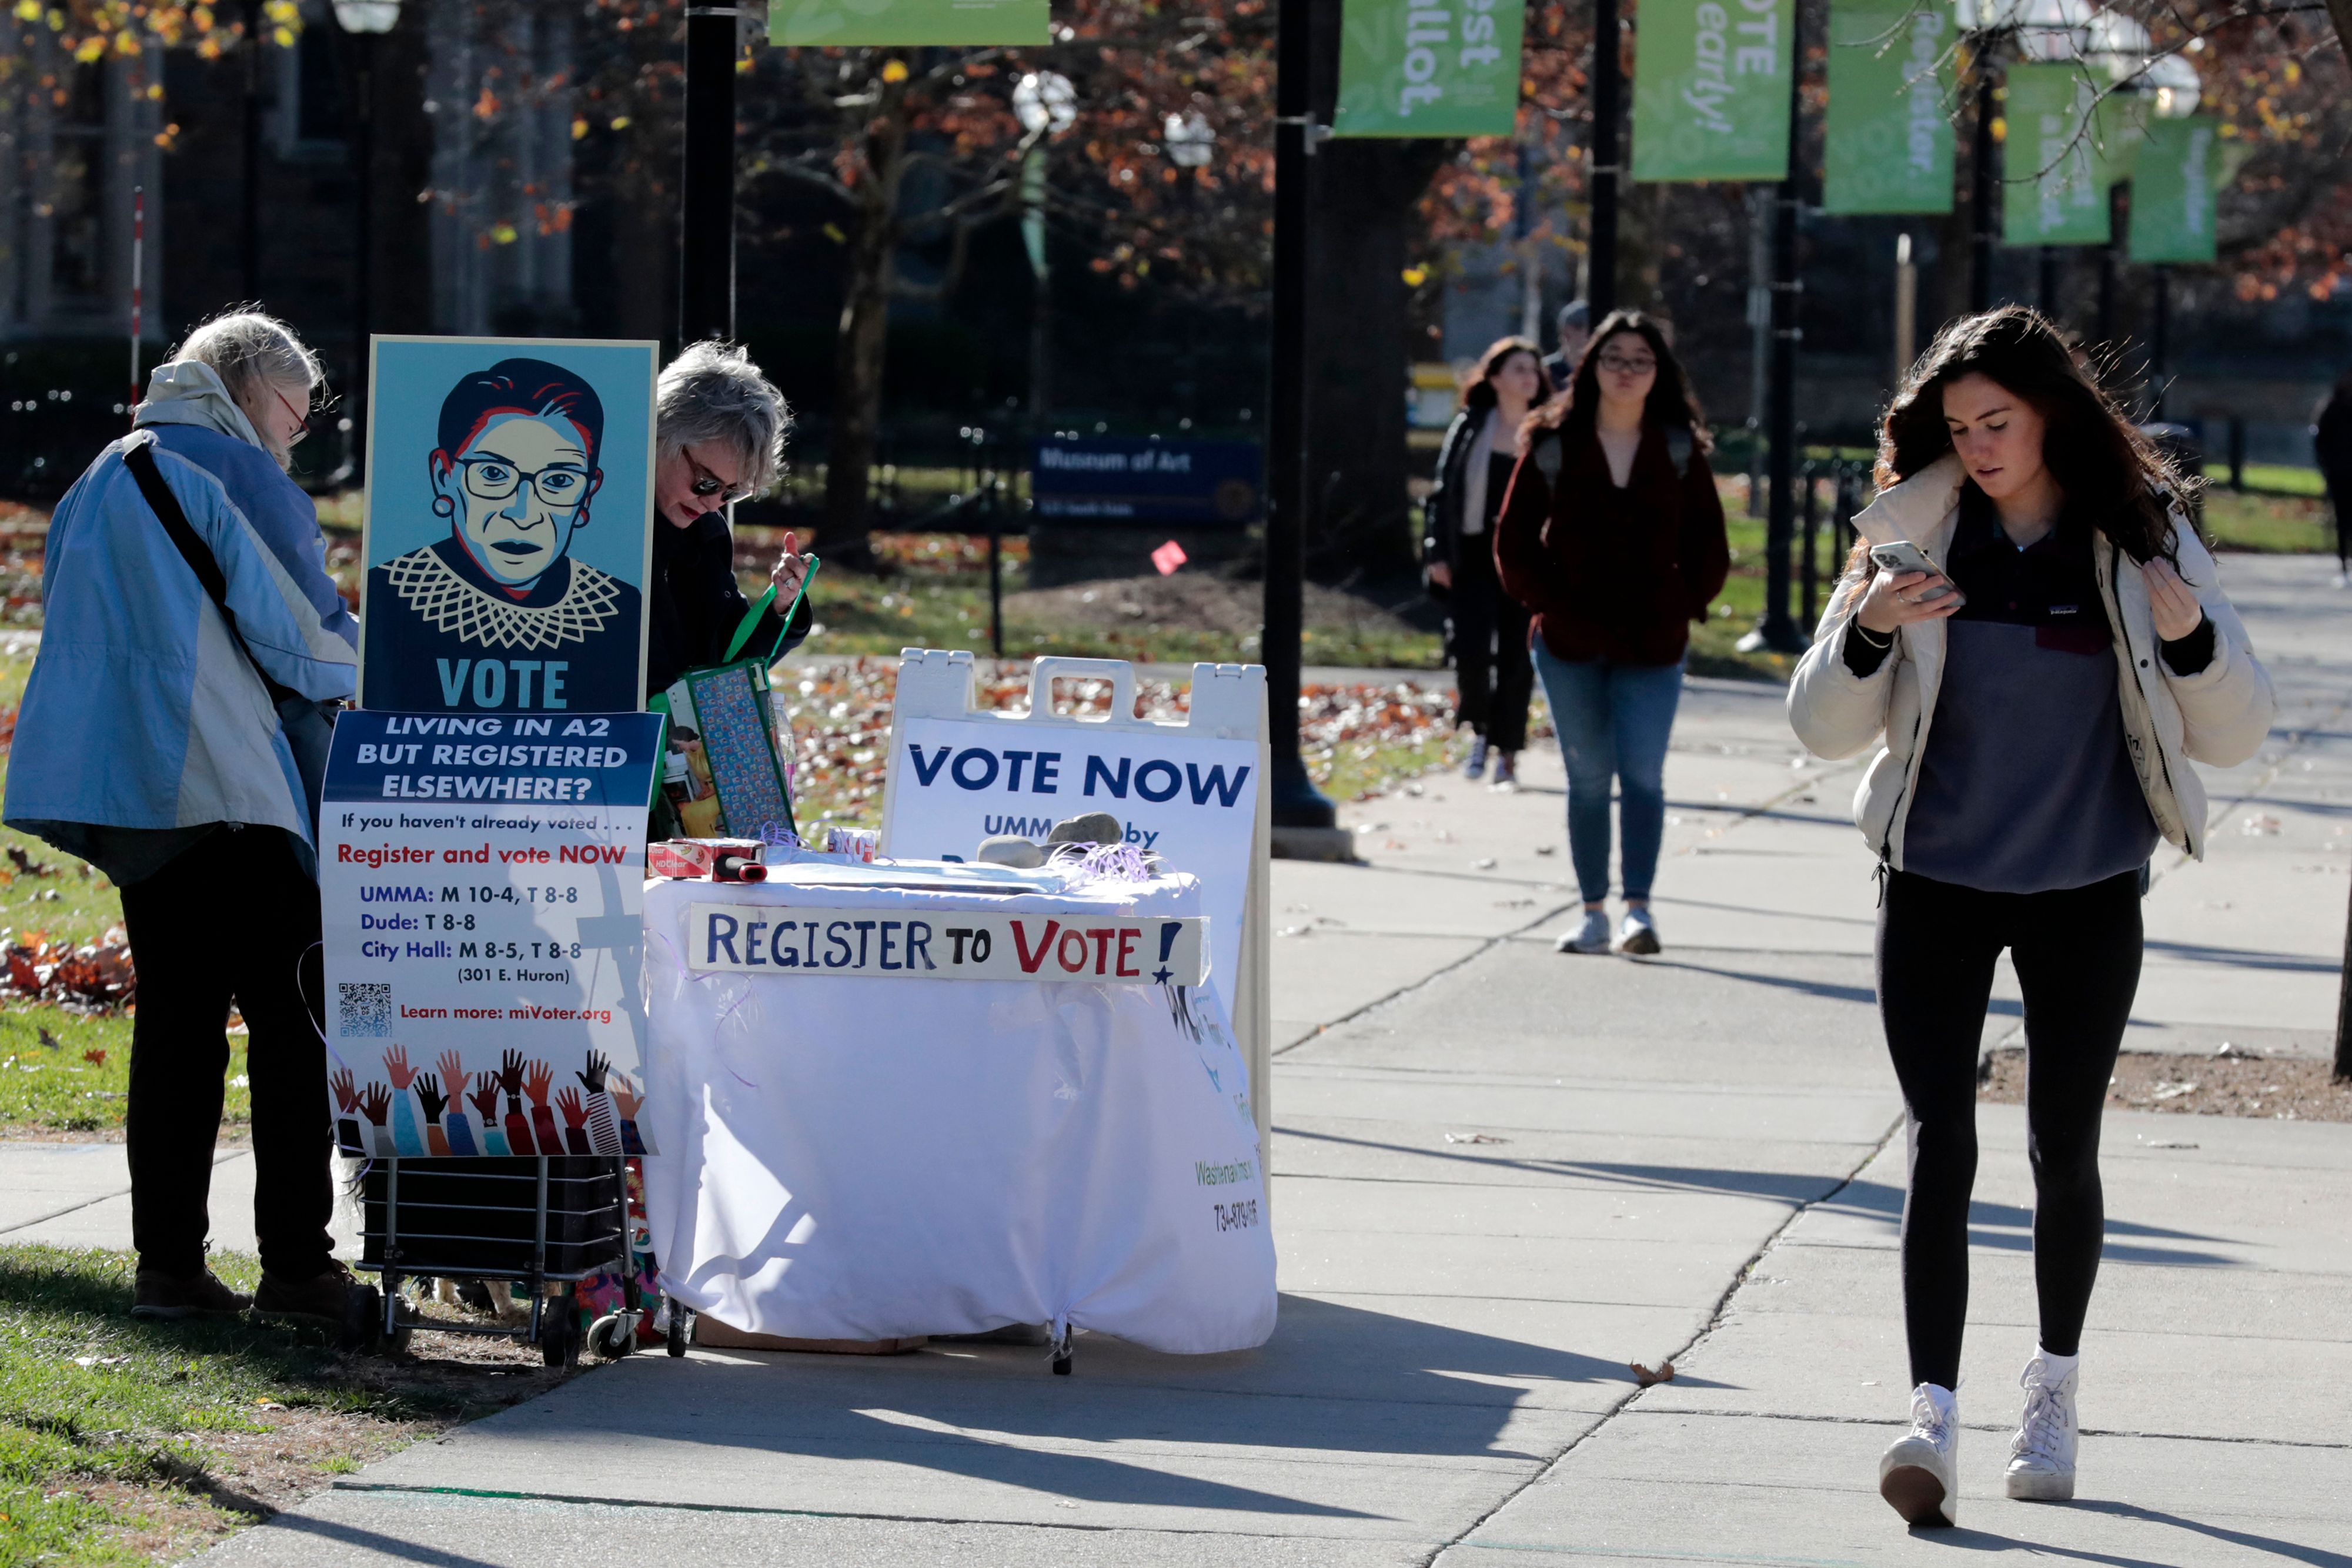 campus voter registration booth